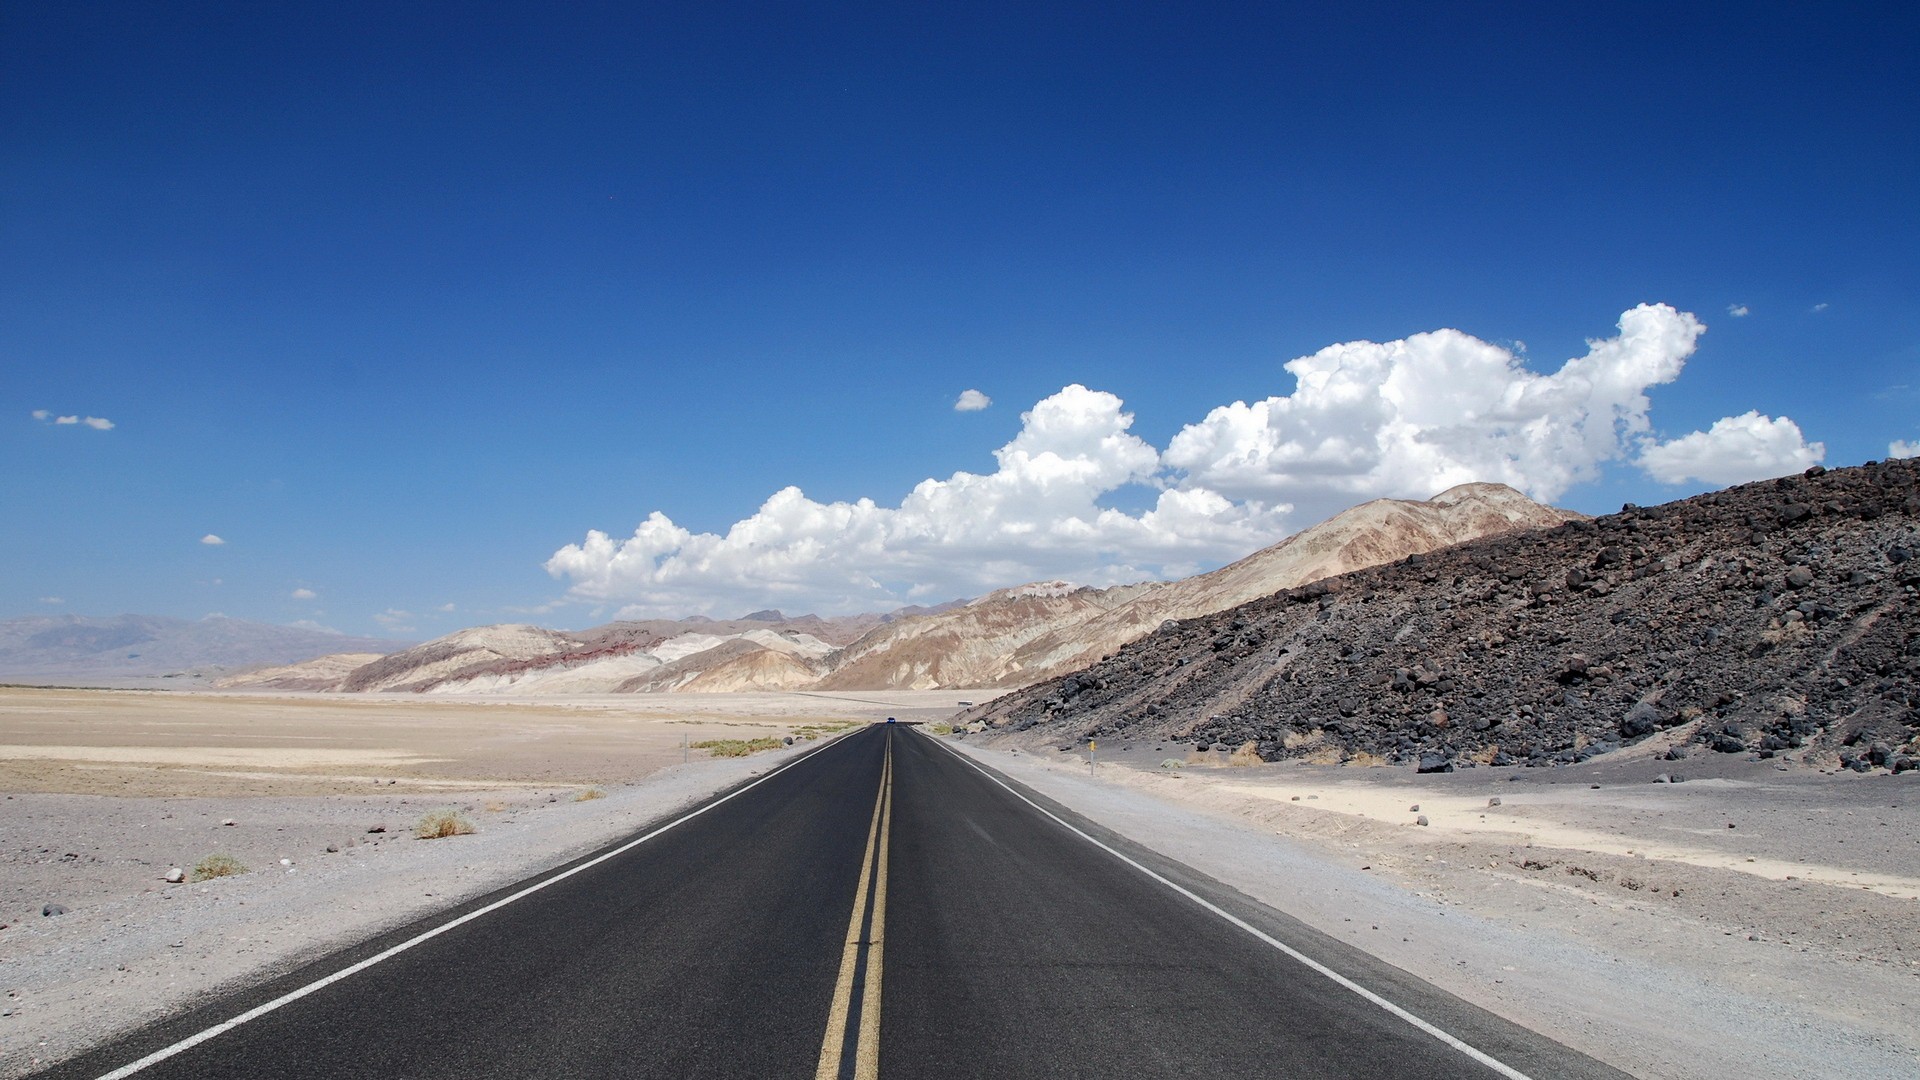 Landscape Road Desert Mountains Death Valley 1920x1080